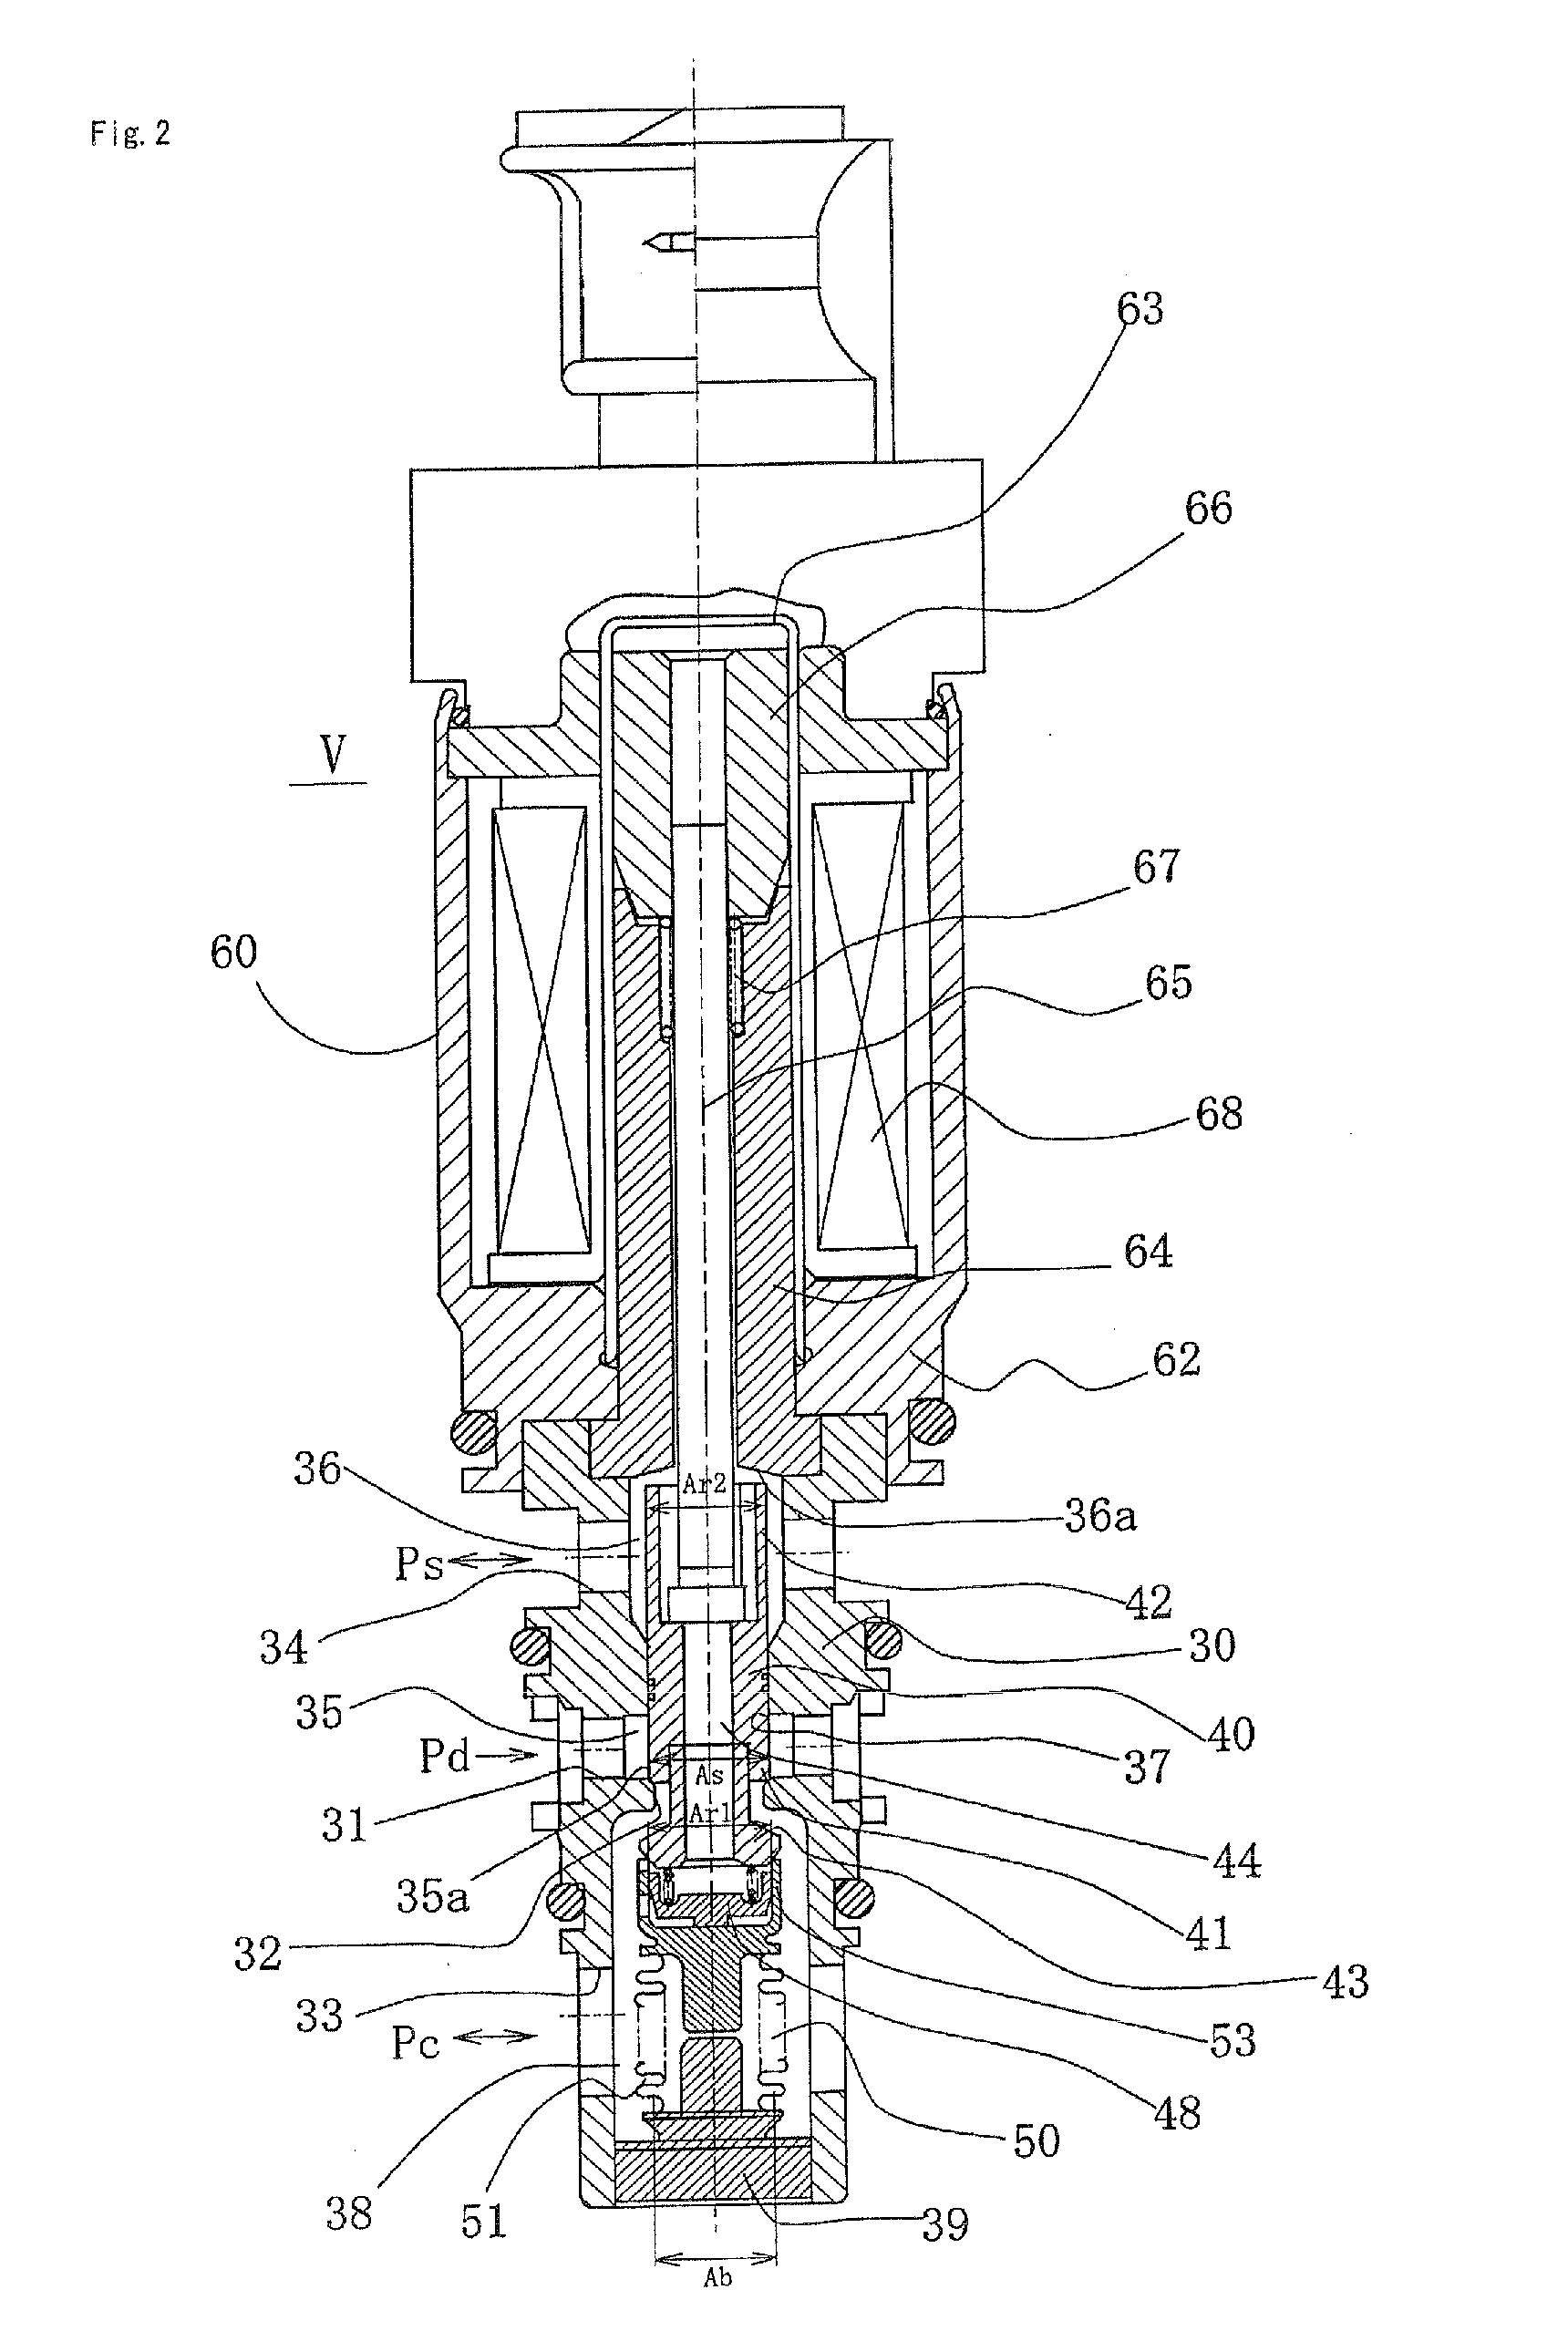 Volume control valve